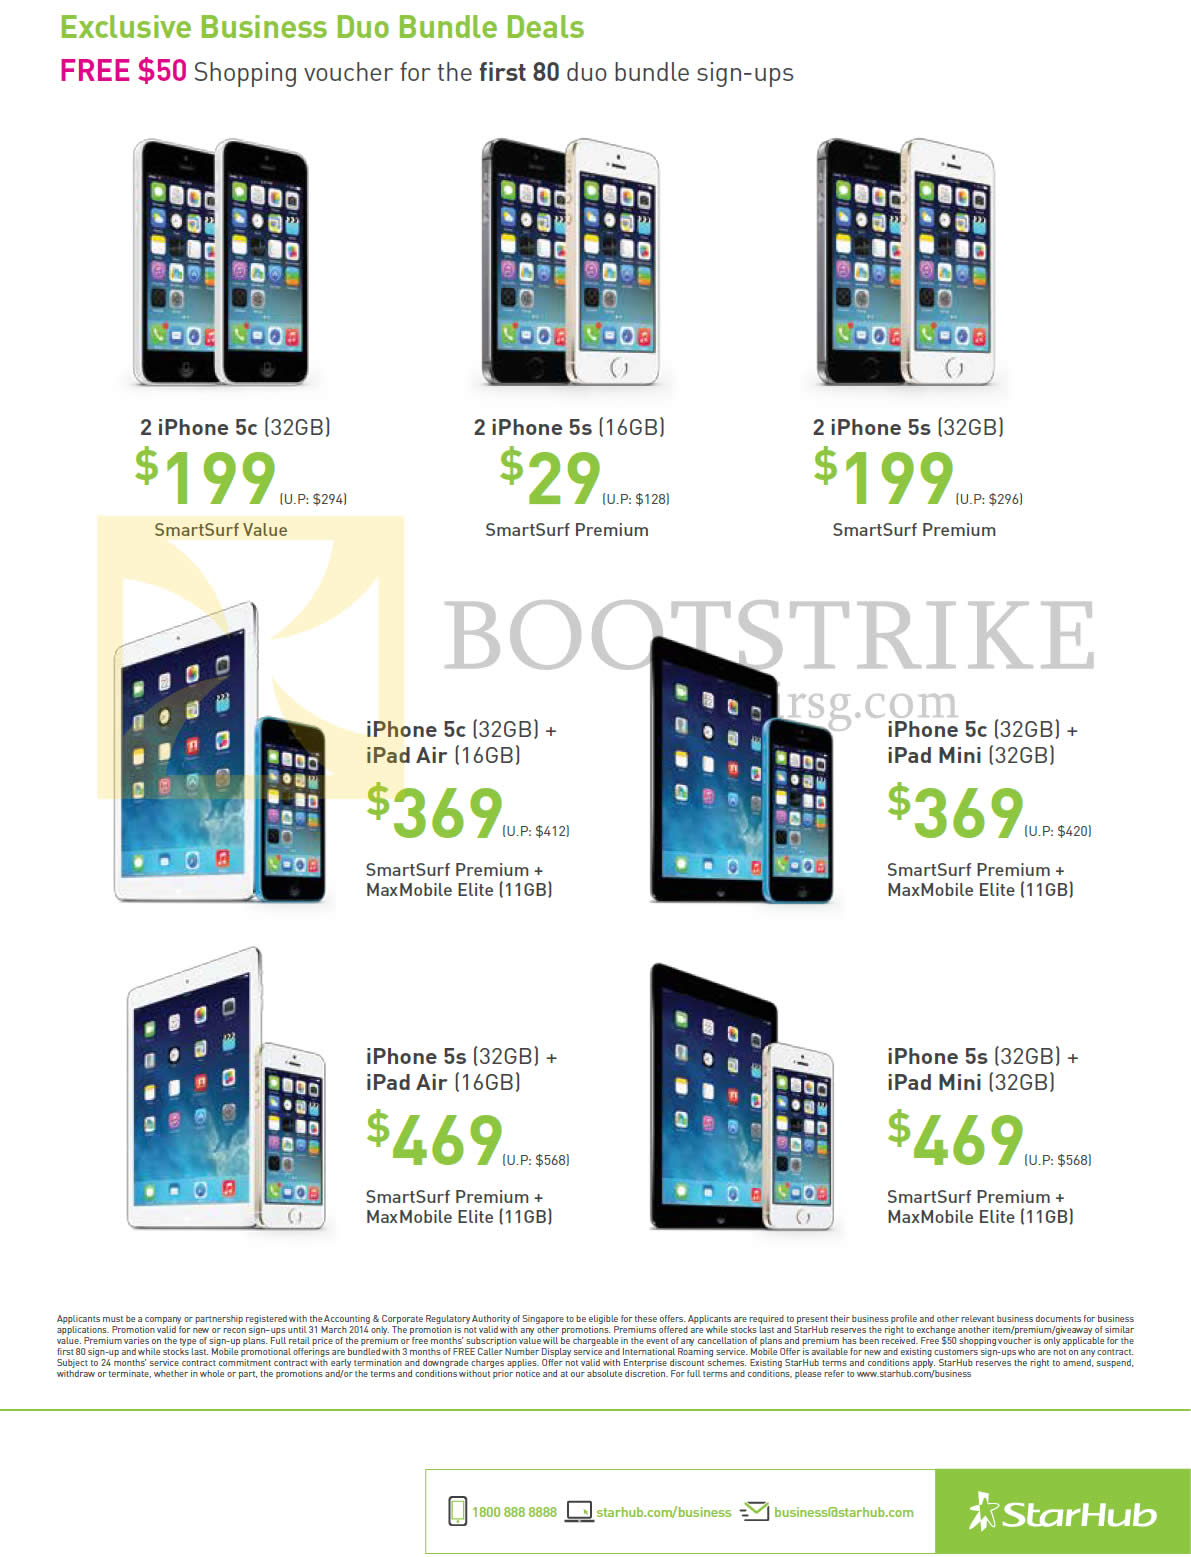 IT SHOW 2014 price list image brochure of StarHub Business Mobile Duo Bundle Offers, Apple IPhone 5C, 5S, IPad Air, IPad Mini